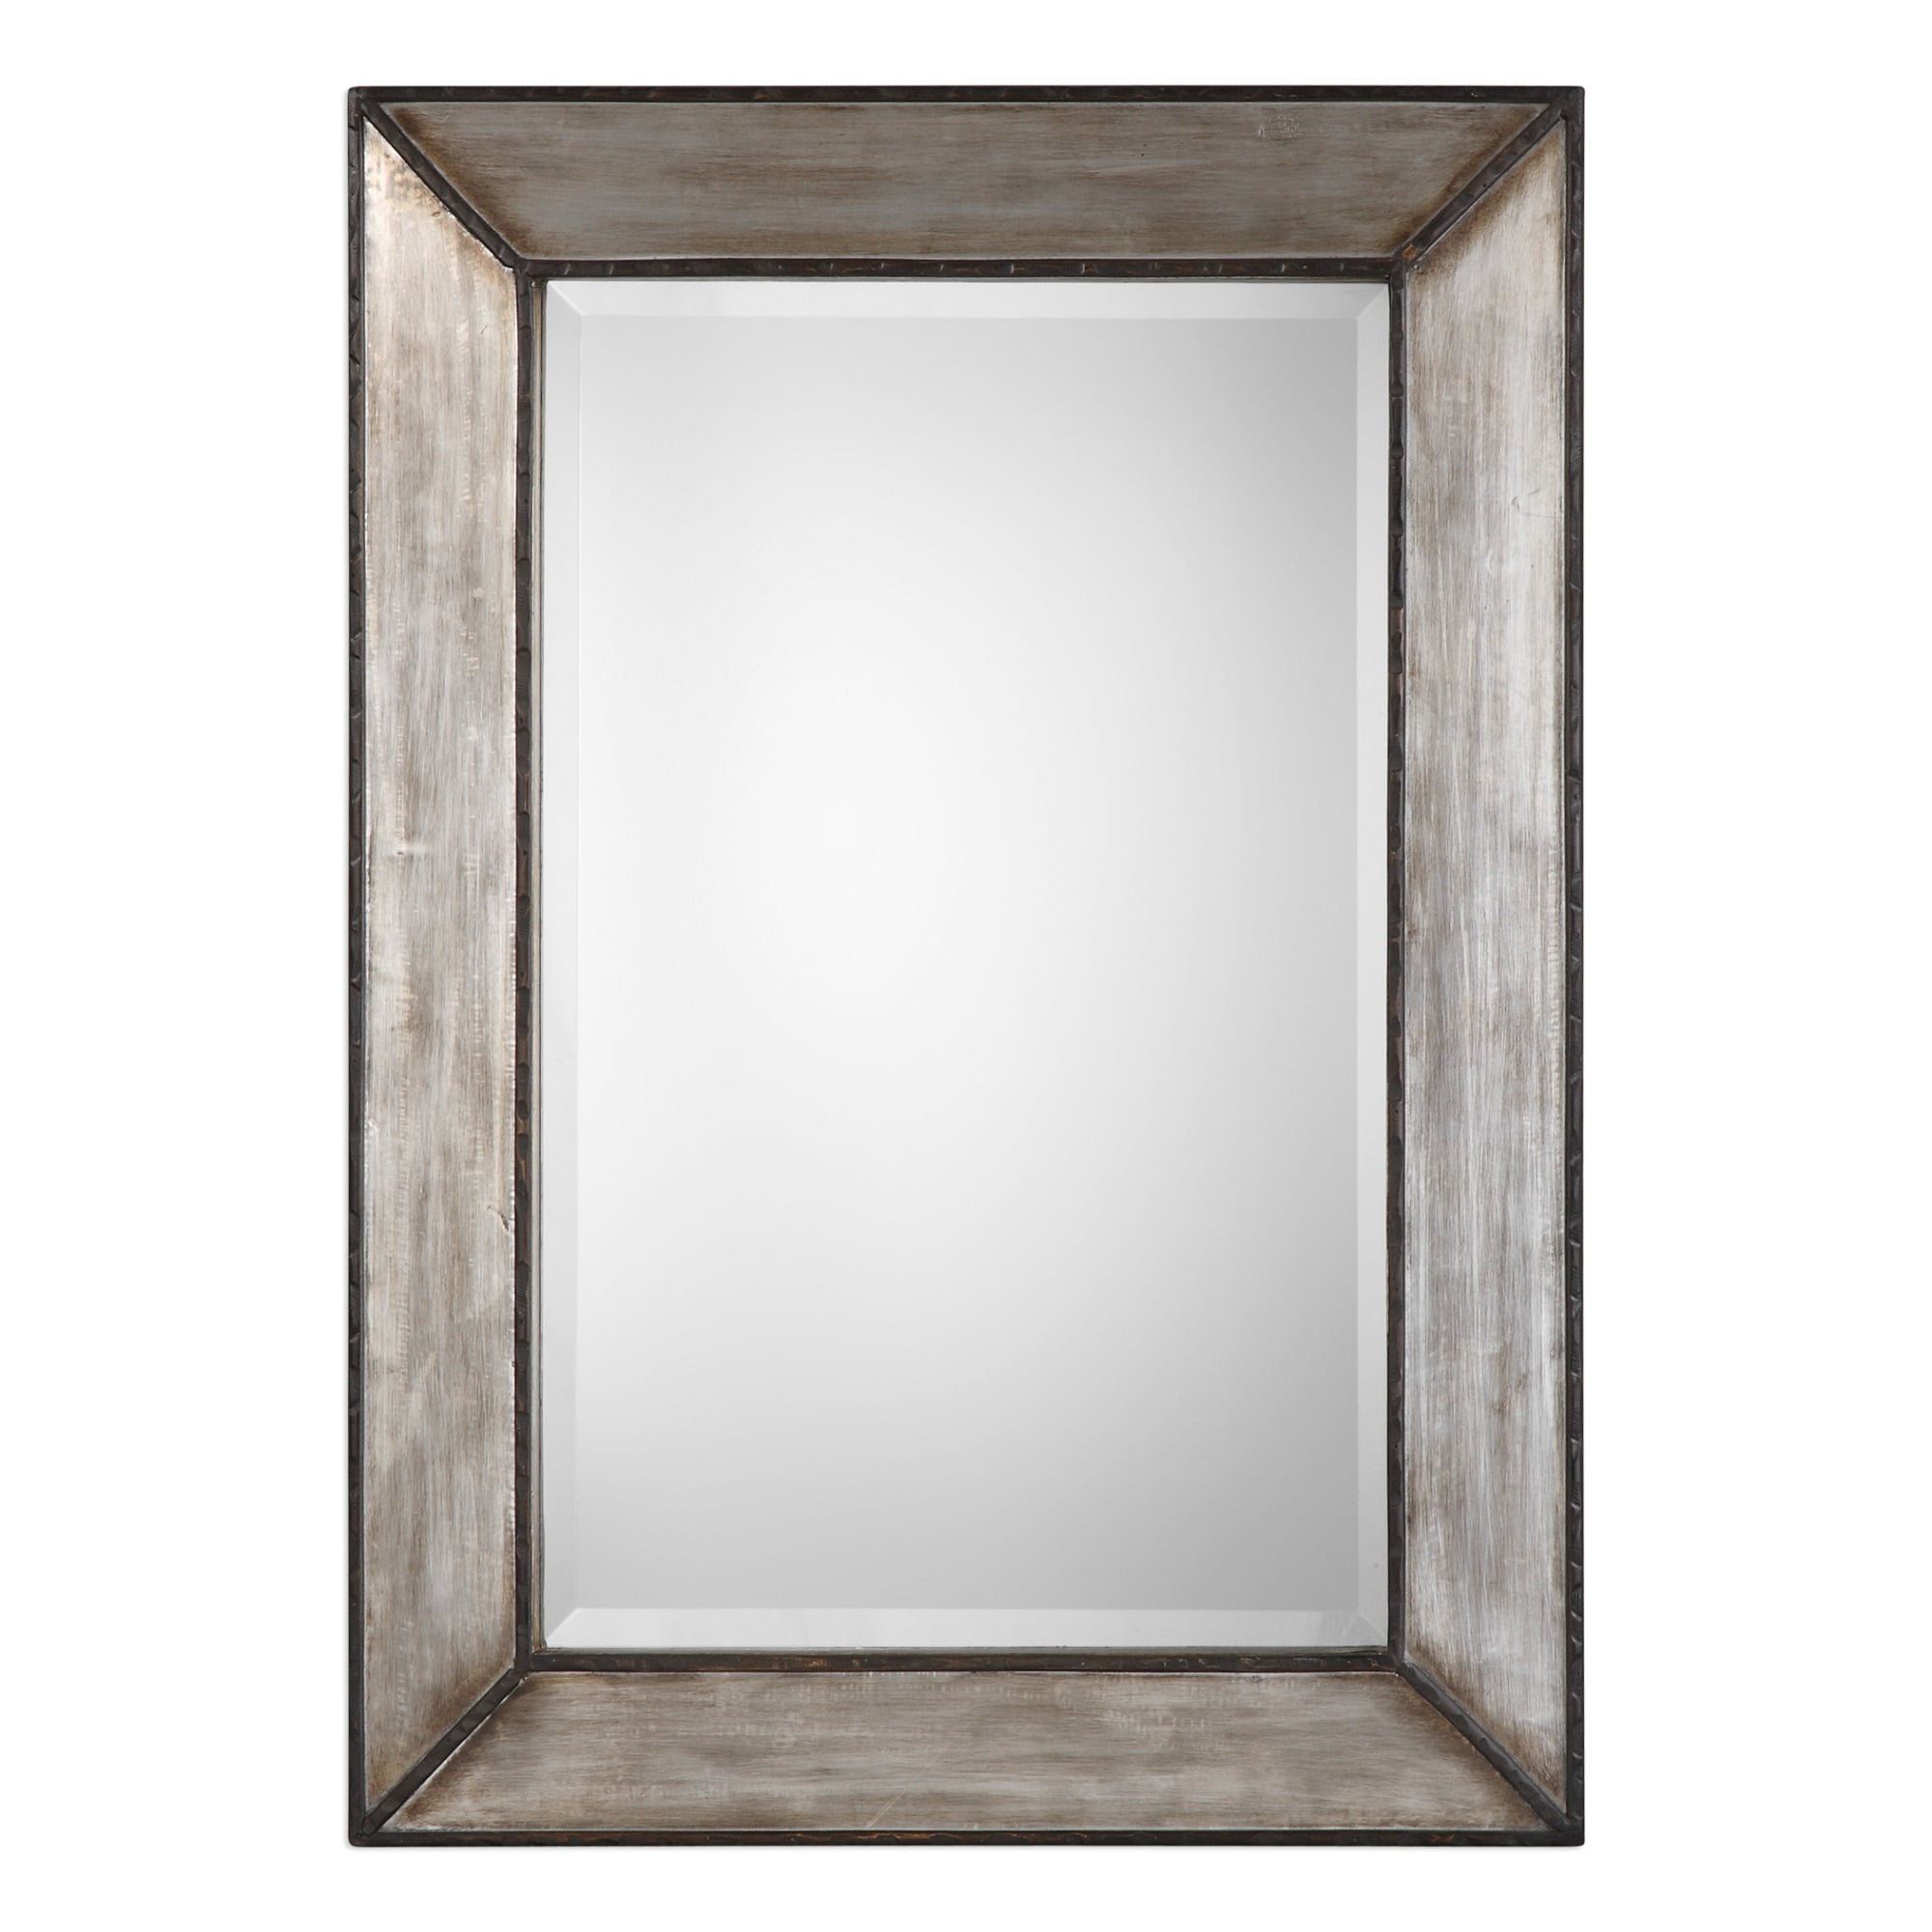 Transitional Rectangular Beveled Wooden Frame Wall Mirror Silver